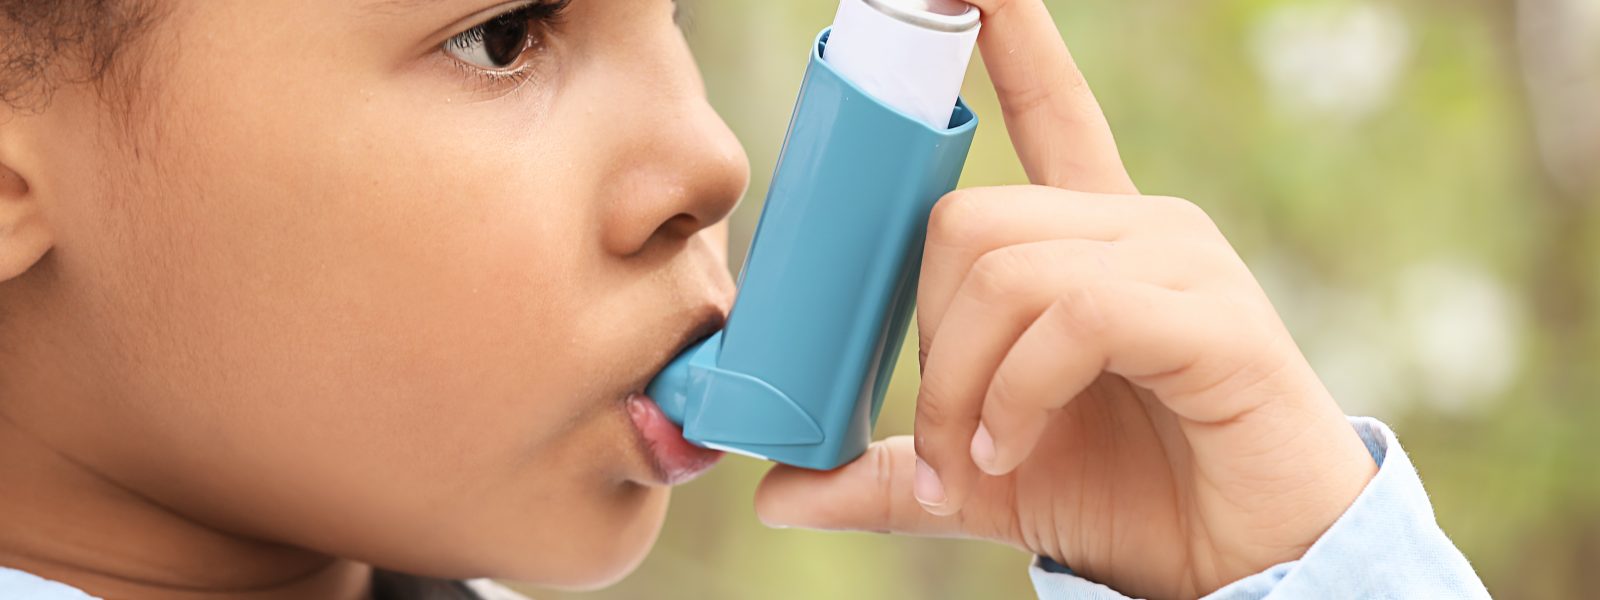 Child using inhaler outside